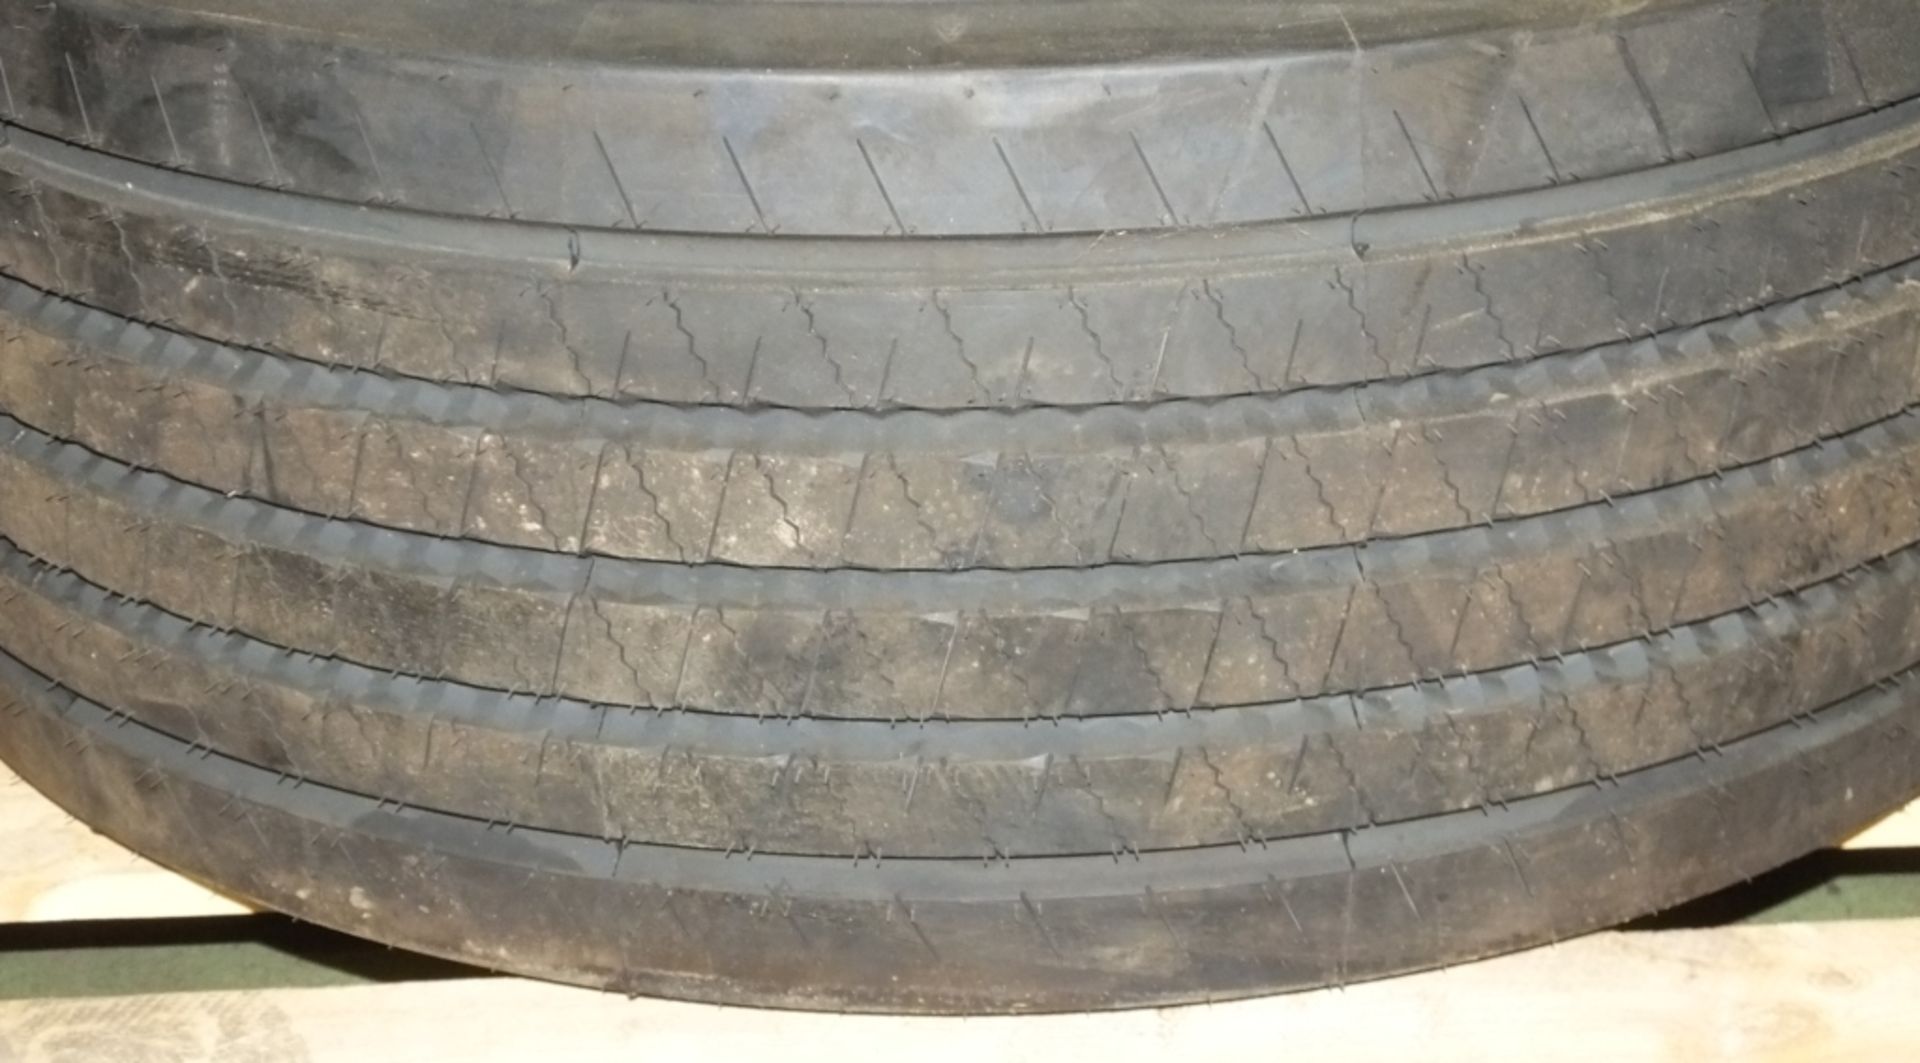 Barum BF 200 Road tire - 385/55 R 22.5 (new & unused) - Image 2 of 6